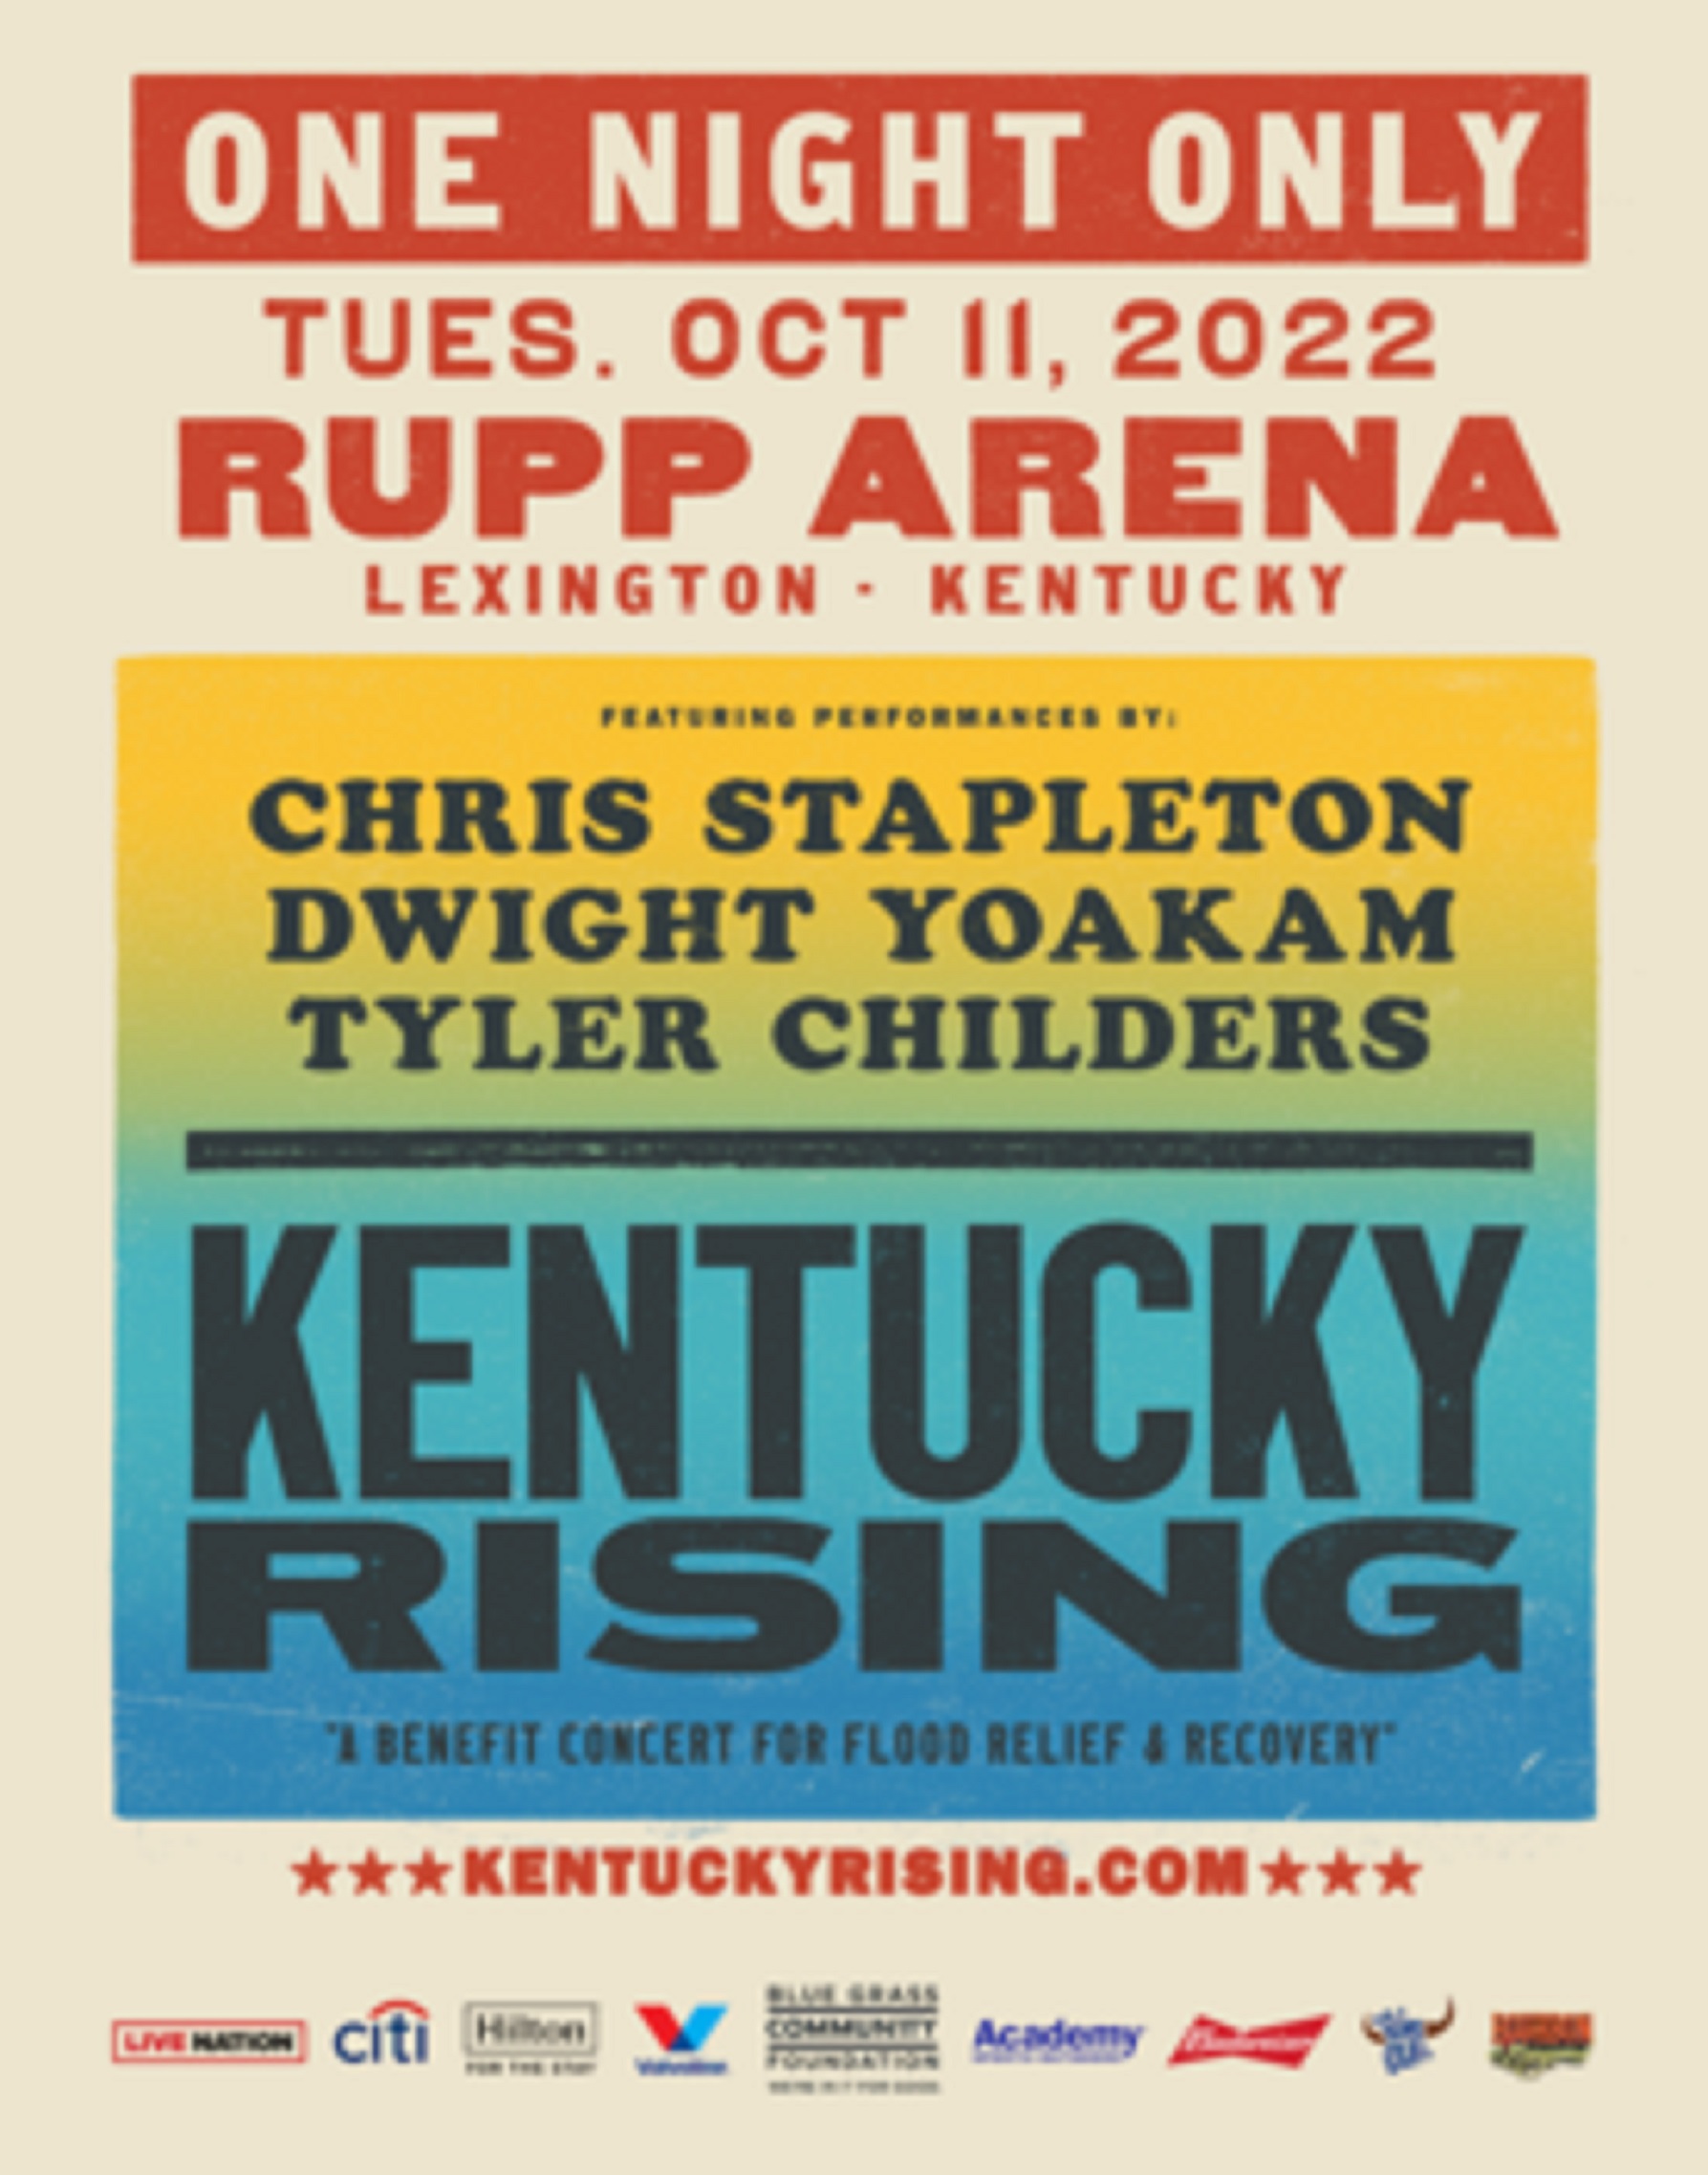 “Kentucky Rising” concert feat. Chris Stapleton, Dwight Yoakam and Tyler Childers to be livestreamed via Veeps